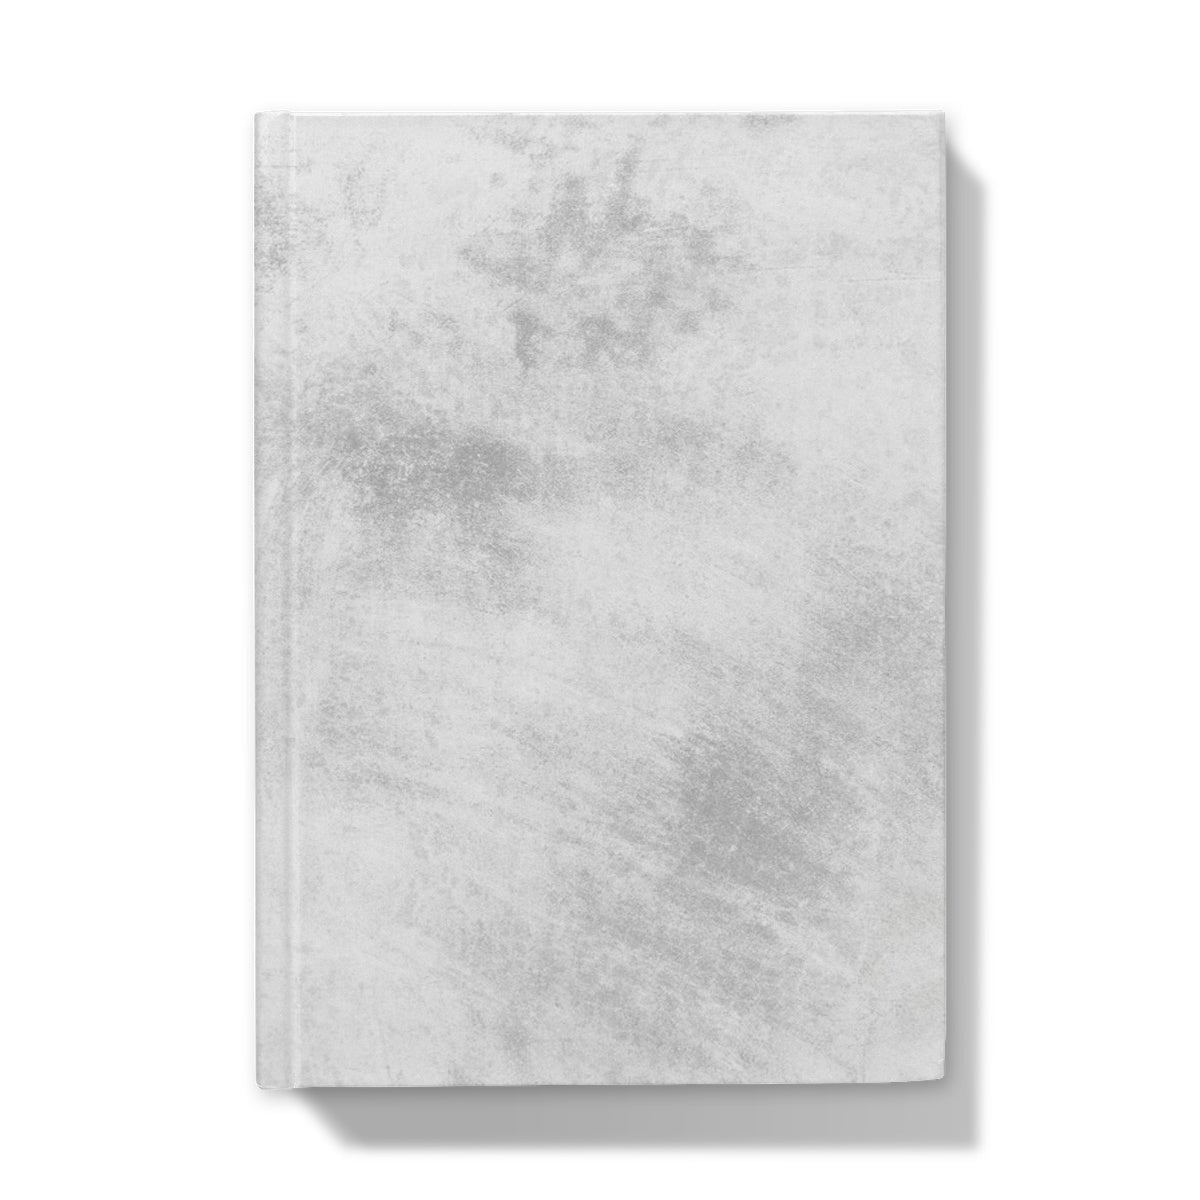 Big Moves - White Painted Hardback Journal - Big Moves